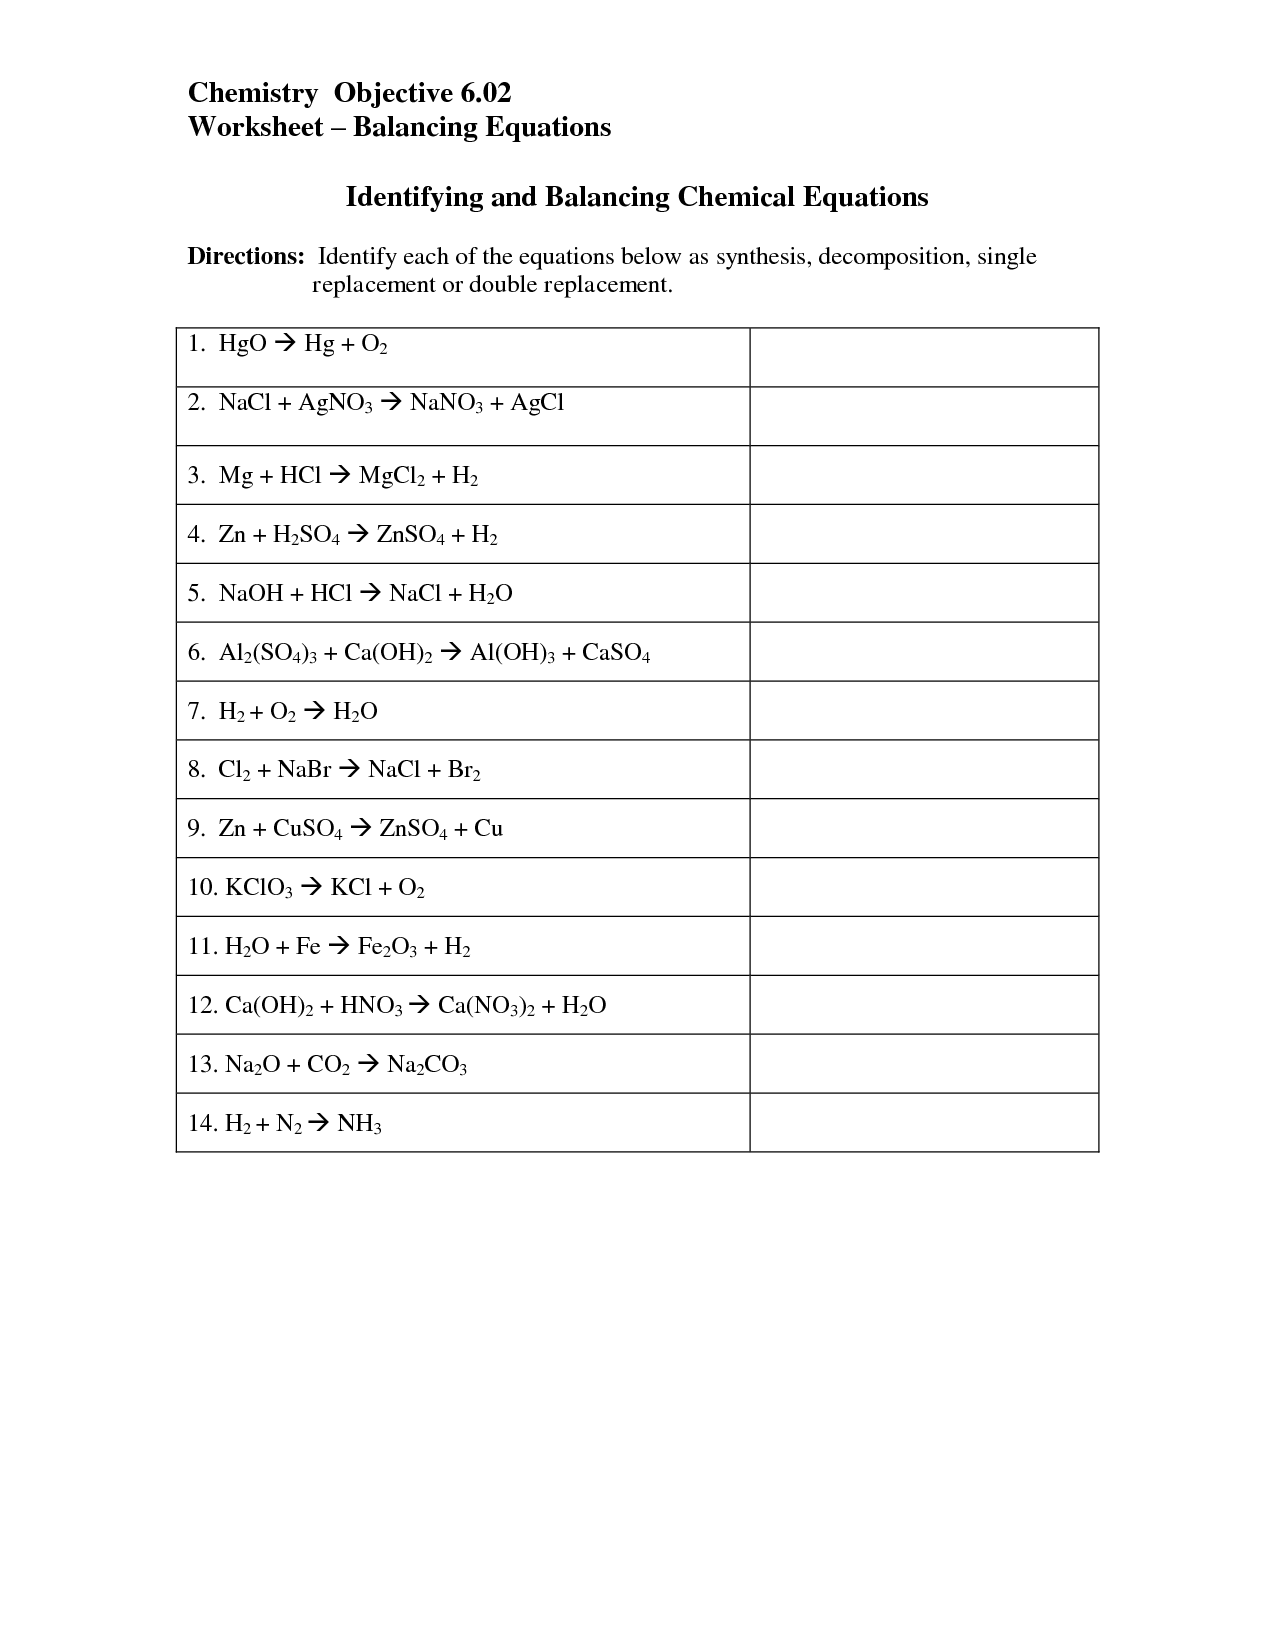 Identifying Chemical Reactions Worksheet Image